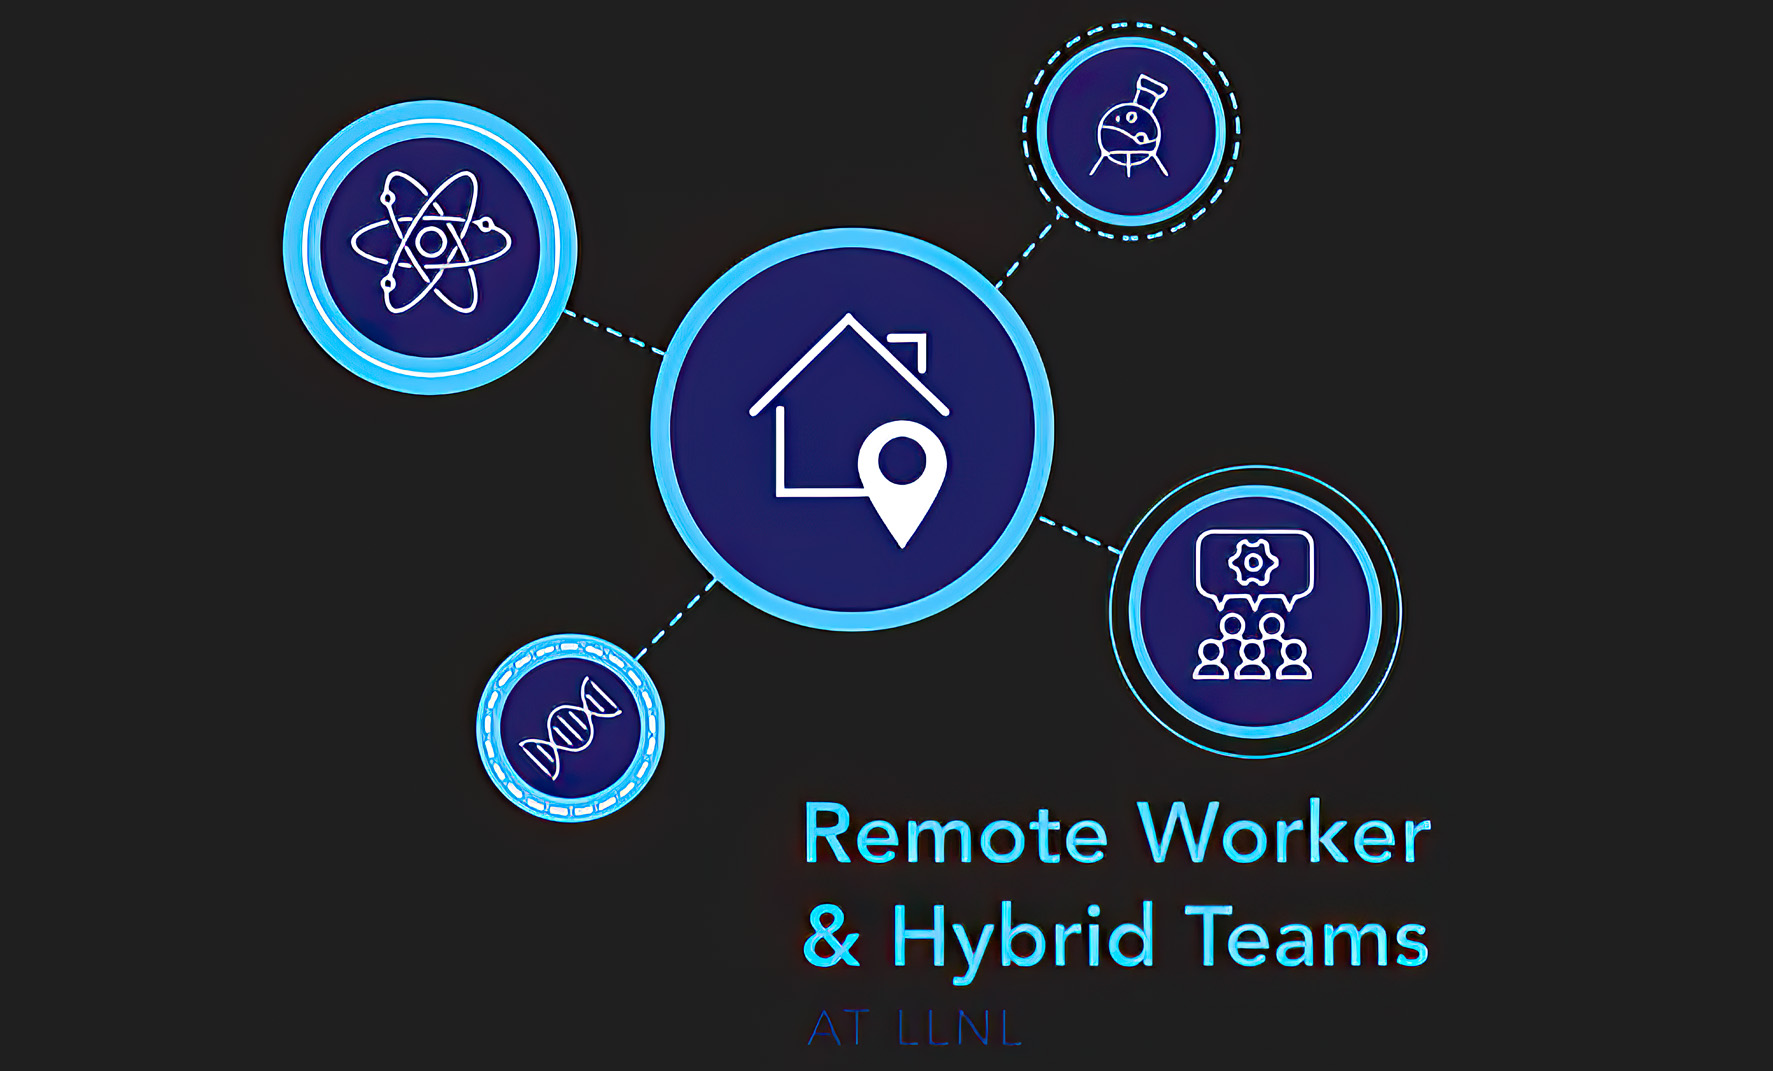 Remote Worker & Hybrid Teams (RW&HT) logo